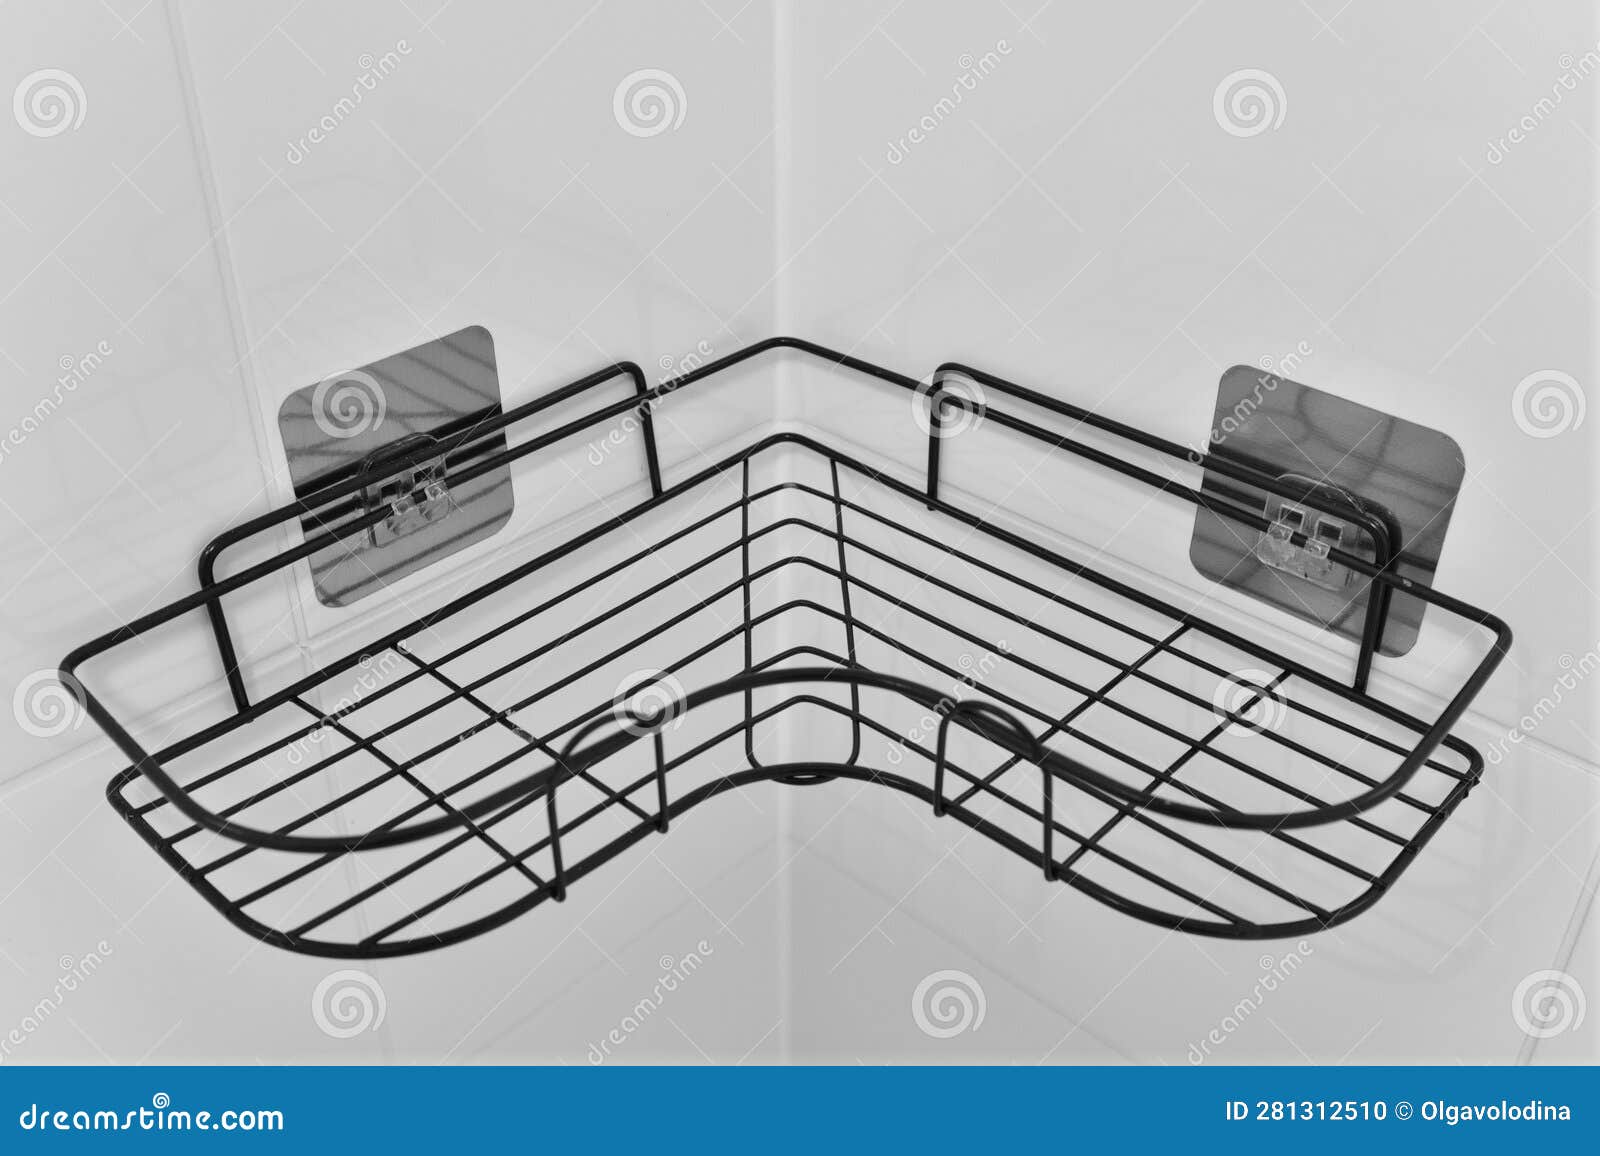 The Corner Metal Shelf in the Bathroom Stock Photo - Image of ...